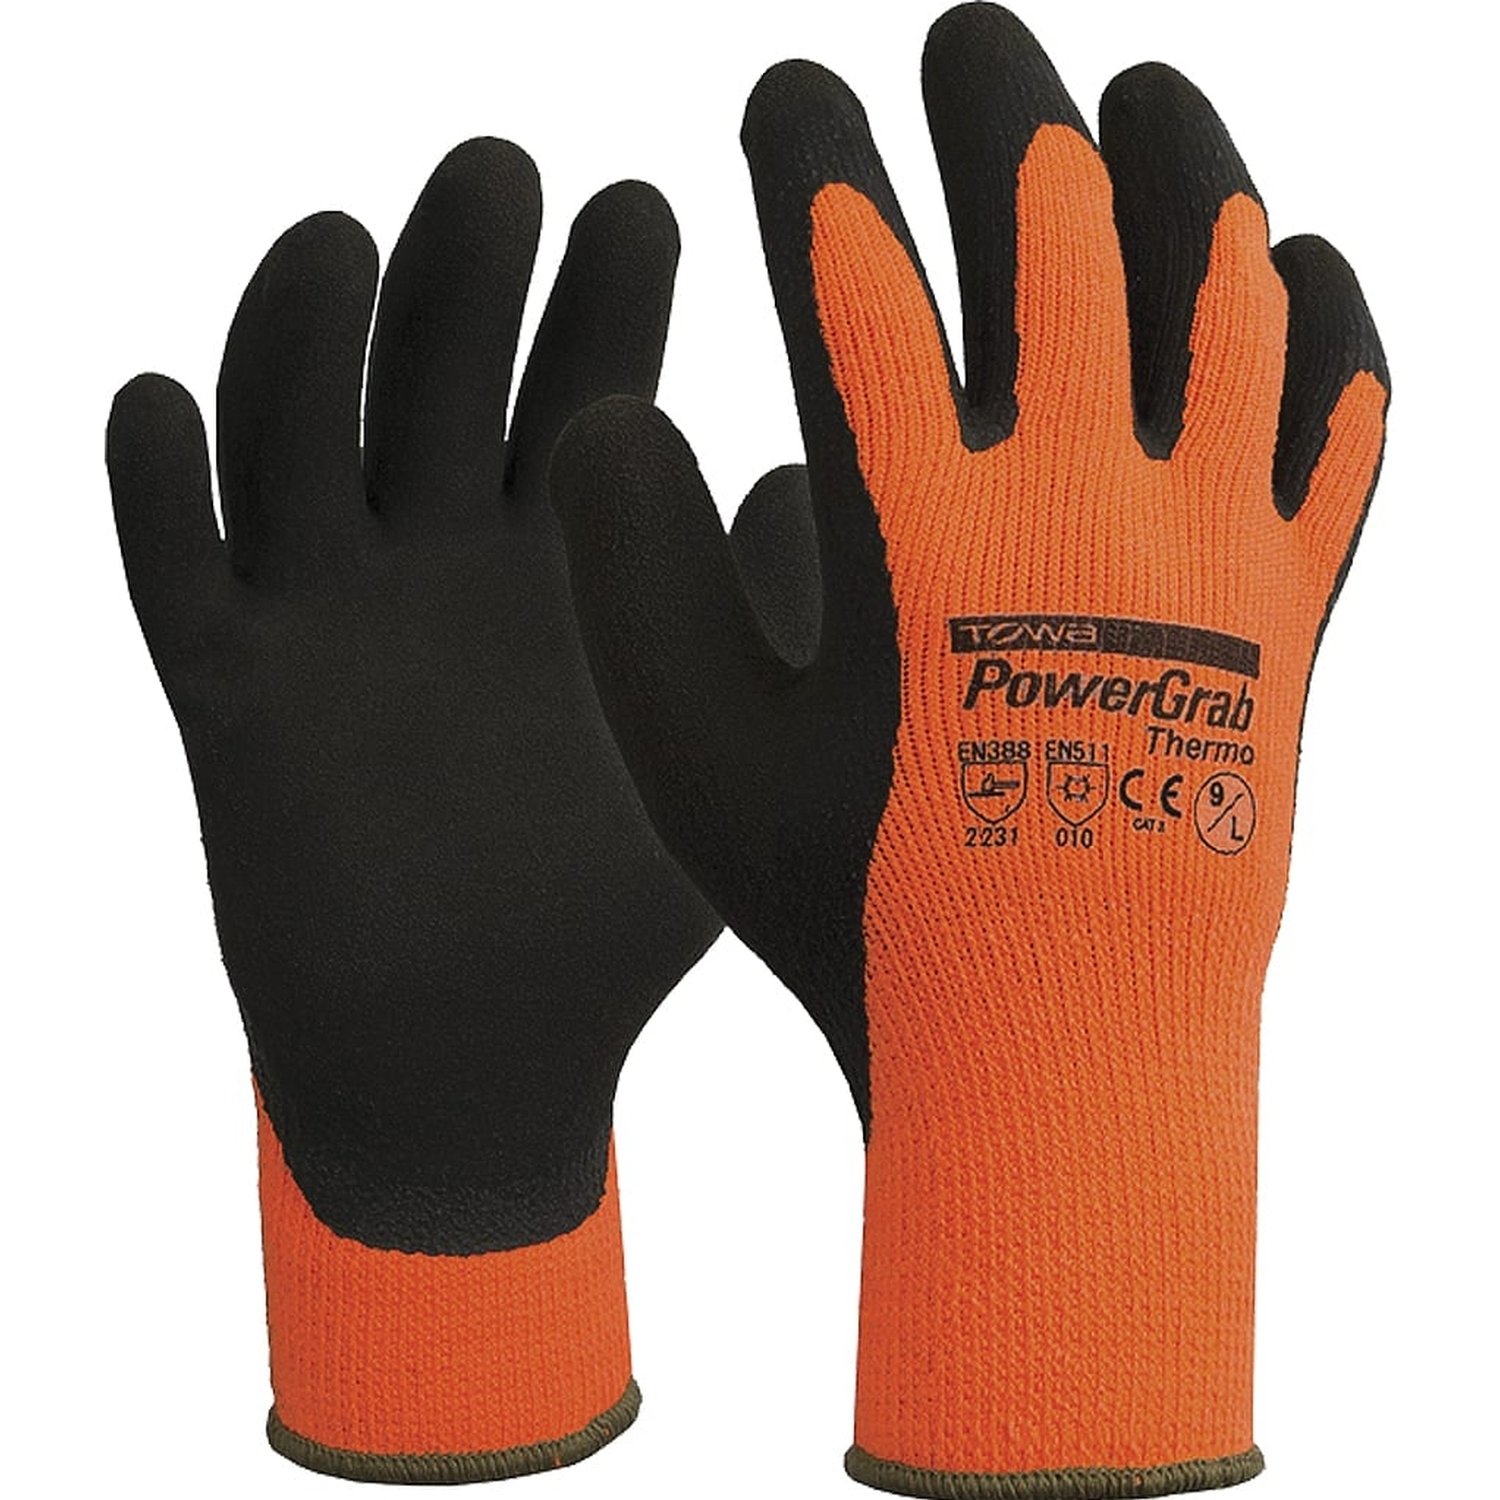 PowerGrab Thermo Winter Gloves Grey/Orange (Pkt 6)